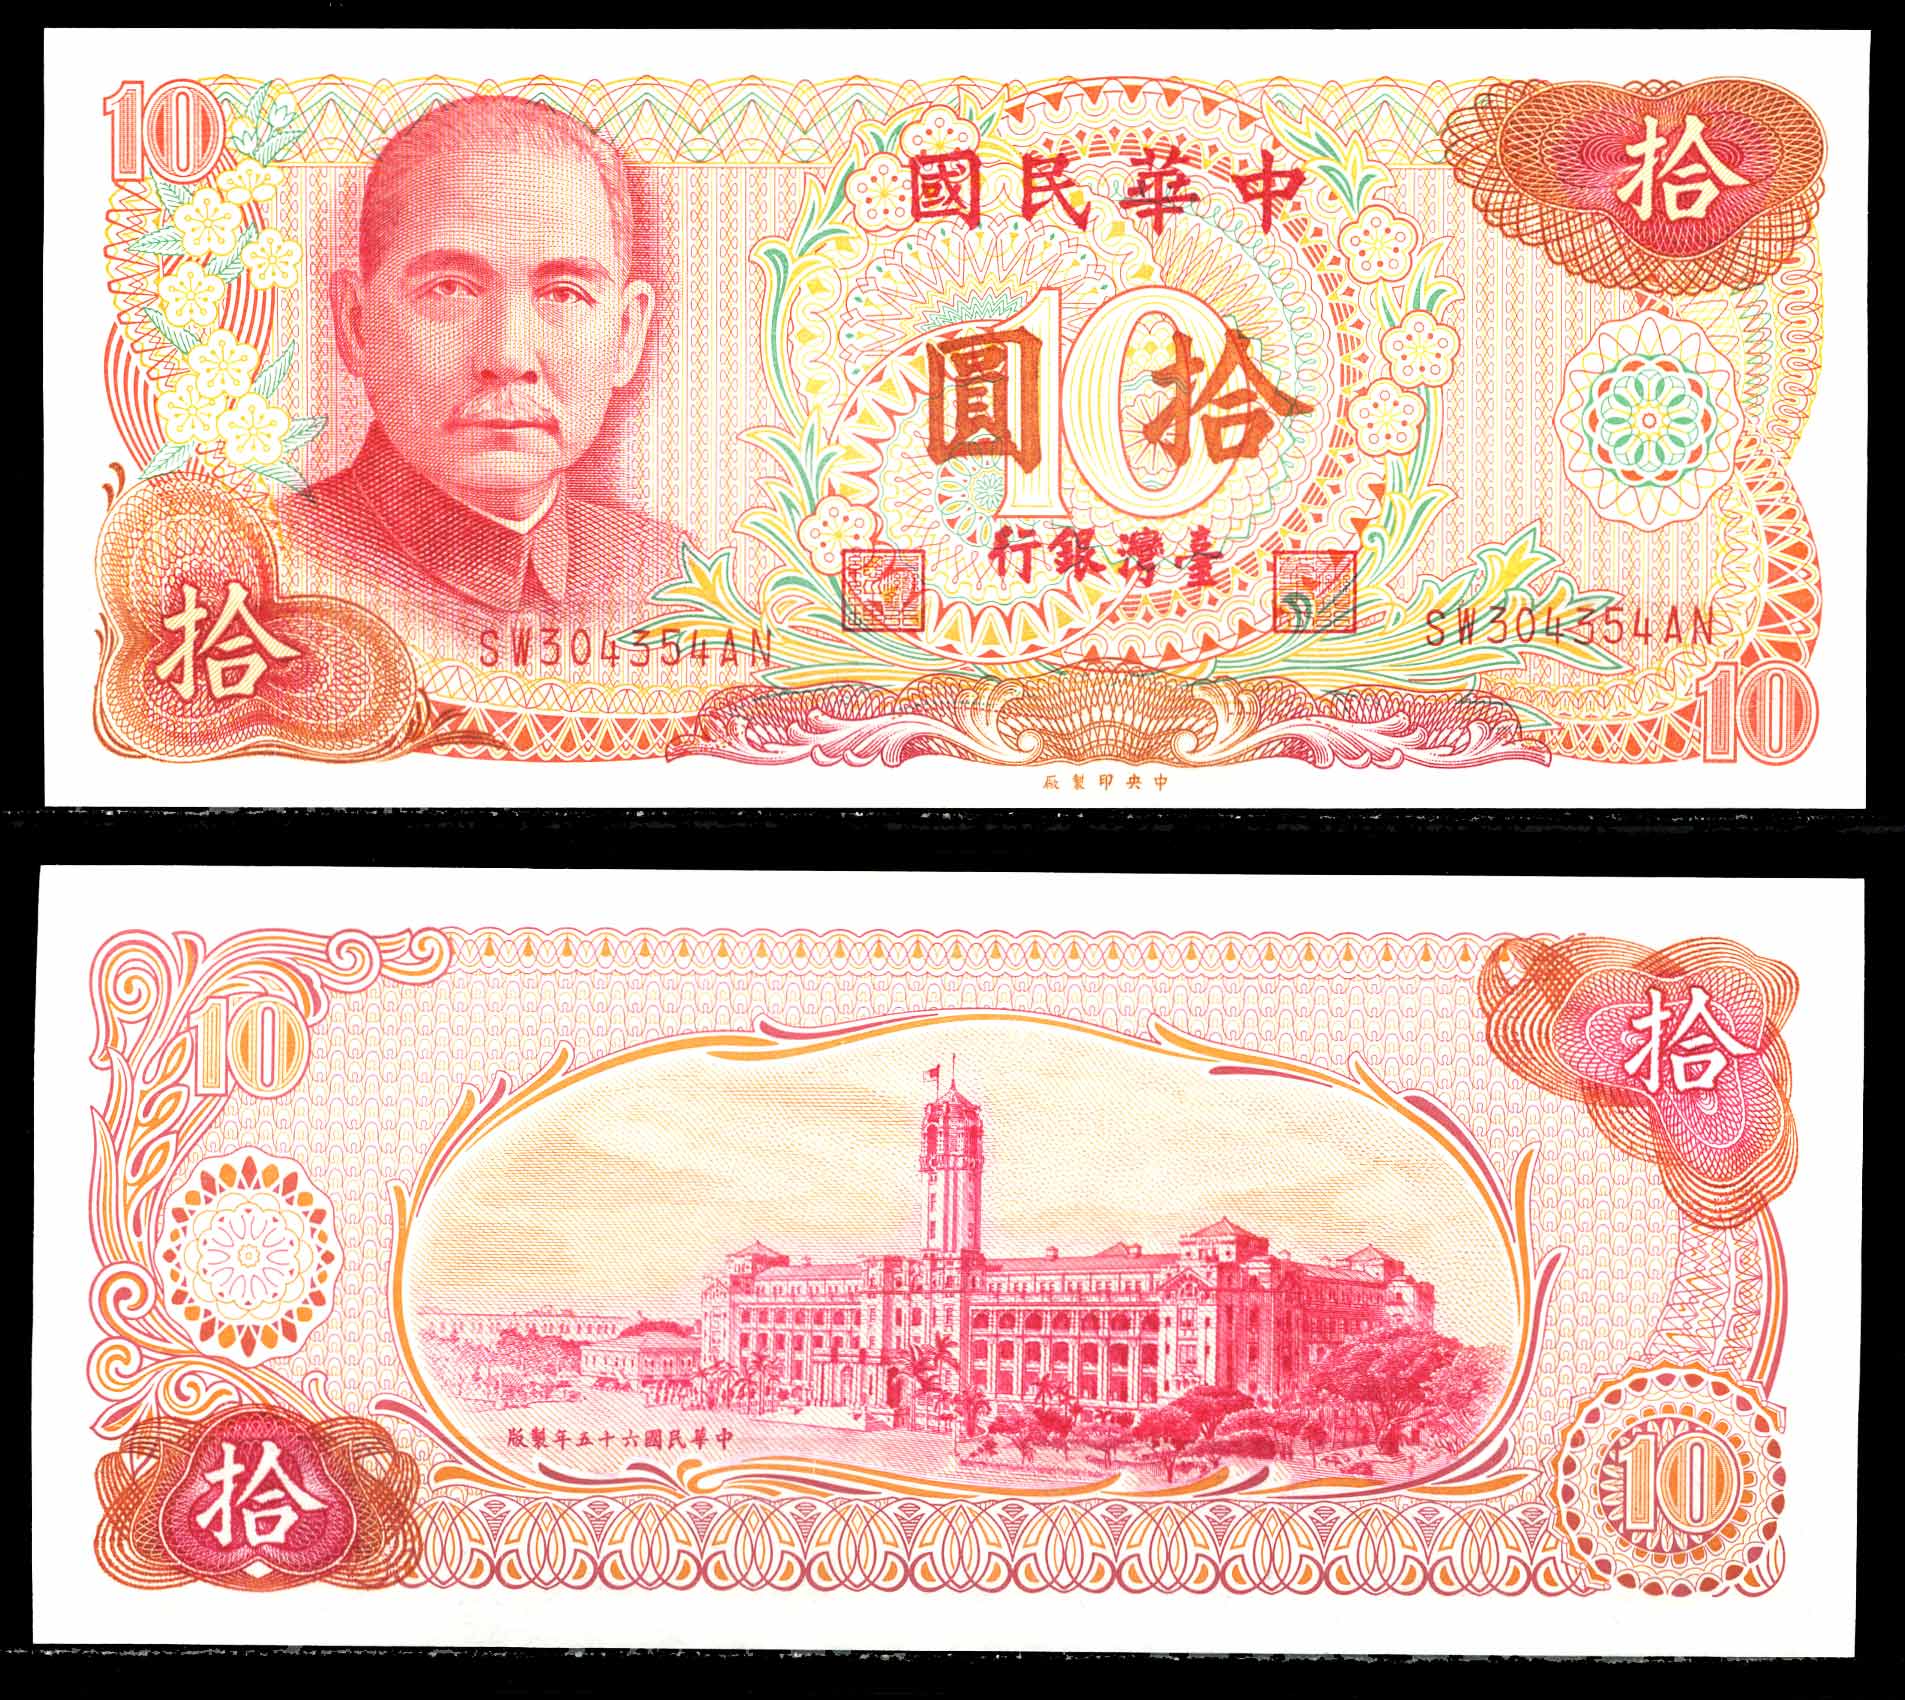 200 тысяч юаней. 10 Юань банкнота Тайвань. Банкнота 100 юаней Тайвань. 10 Юаней Китай банкноты. Банкноты Тайваня 2020.